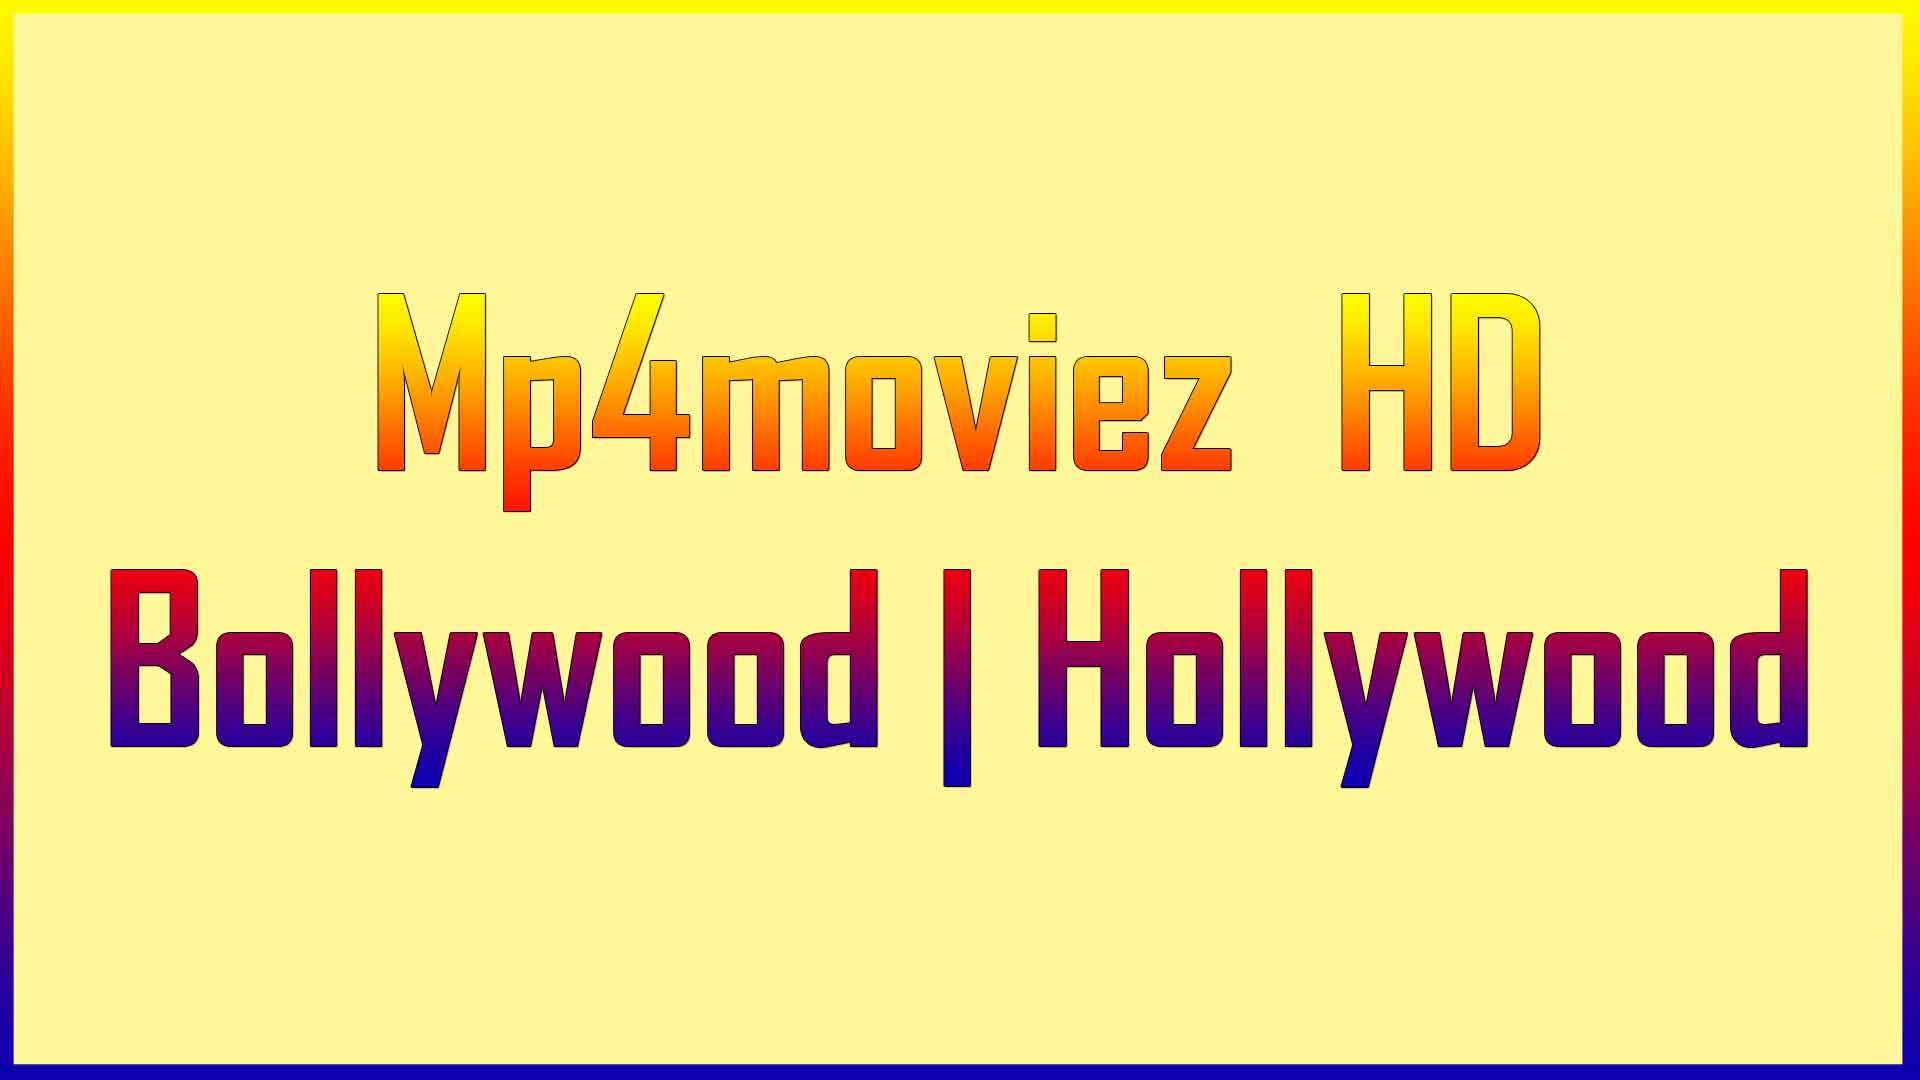 MP4Moviez Bollywood, Hollywood Hindi Dubbed Movies